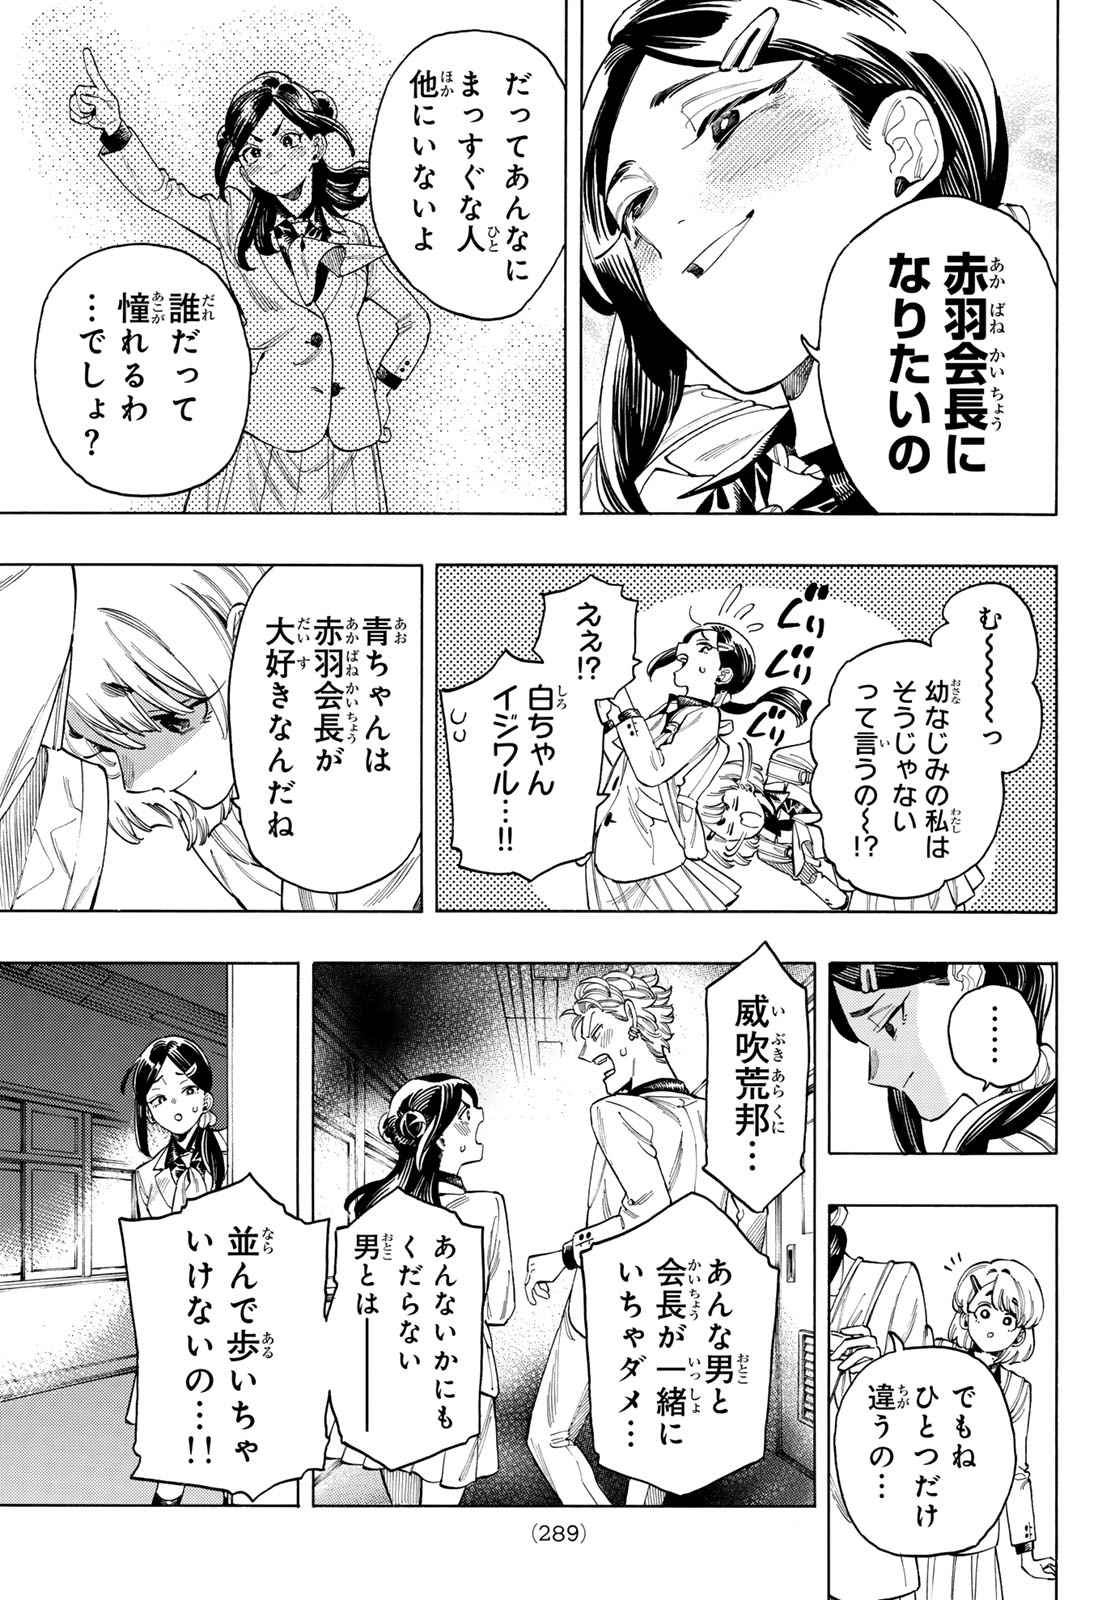 Akabane Honeko no Bodyguard - Chapter 77 - Page 13